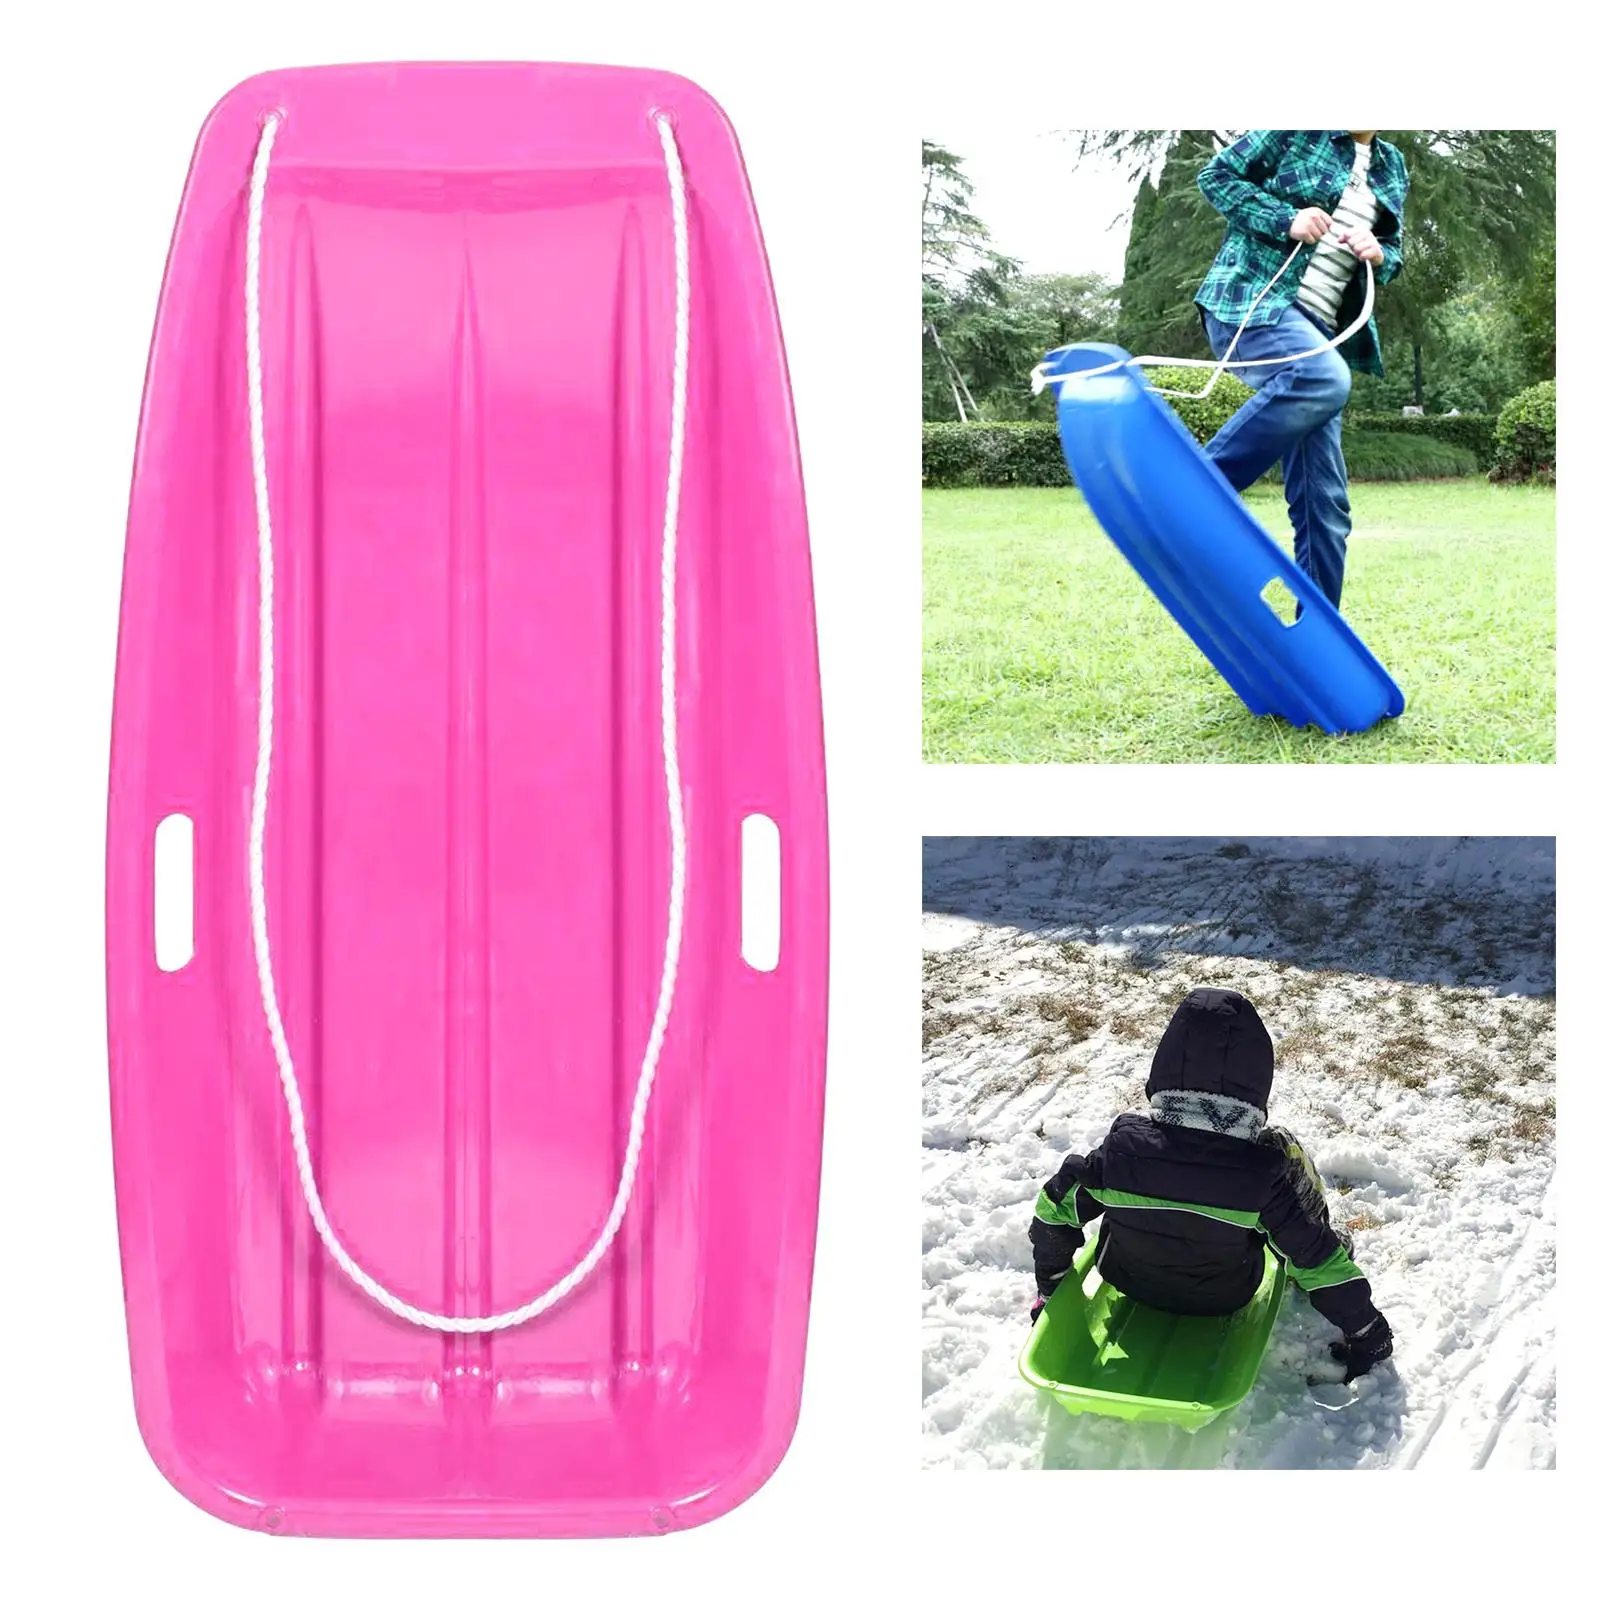 Outdoor Snow Sled Thicken Sledge Durable for Skating Sandboarding Kids